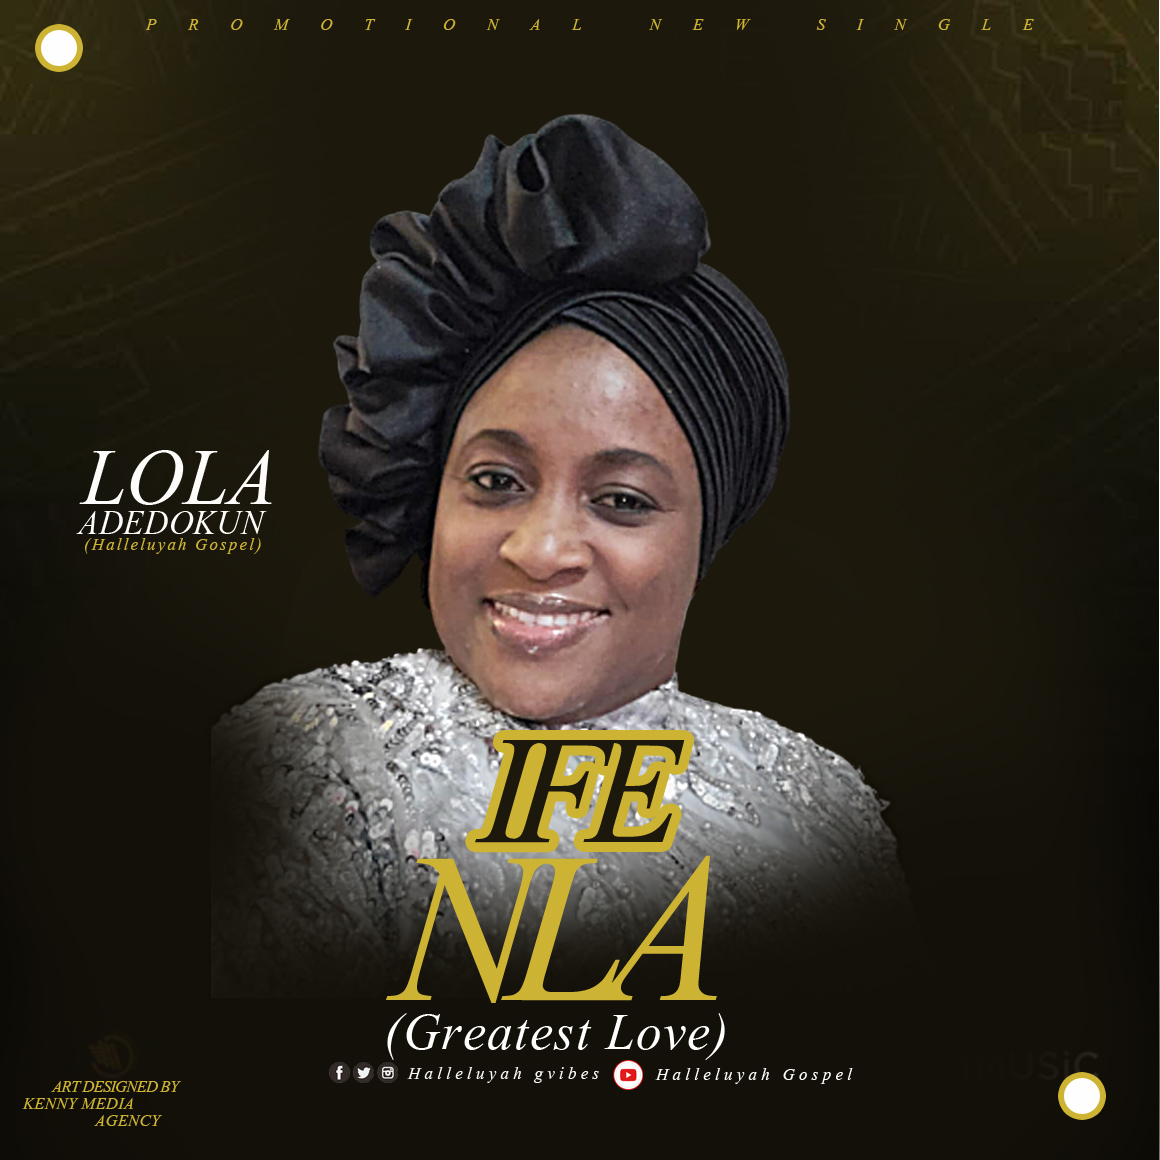 Ife Nla (Greatest Love) by Lola Adedokun